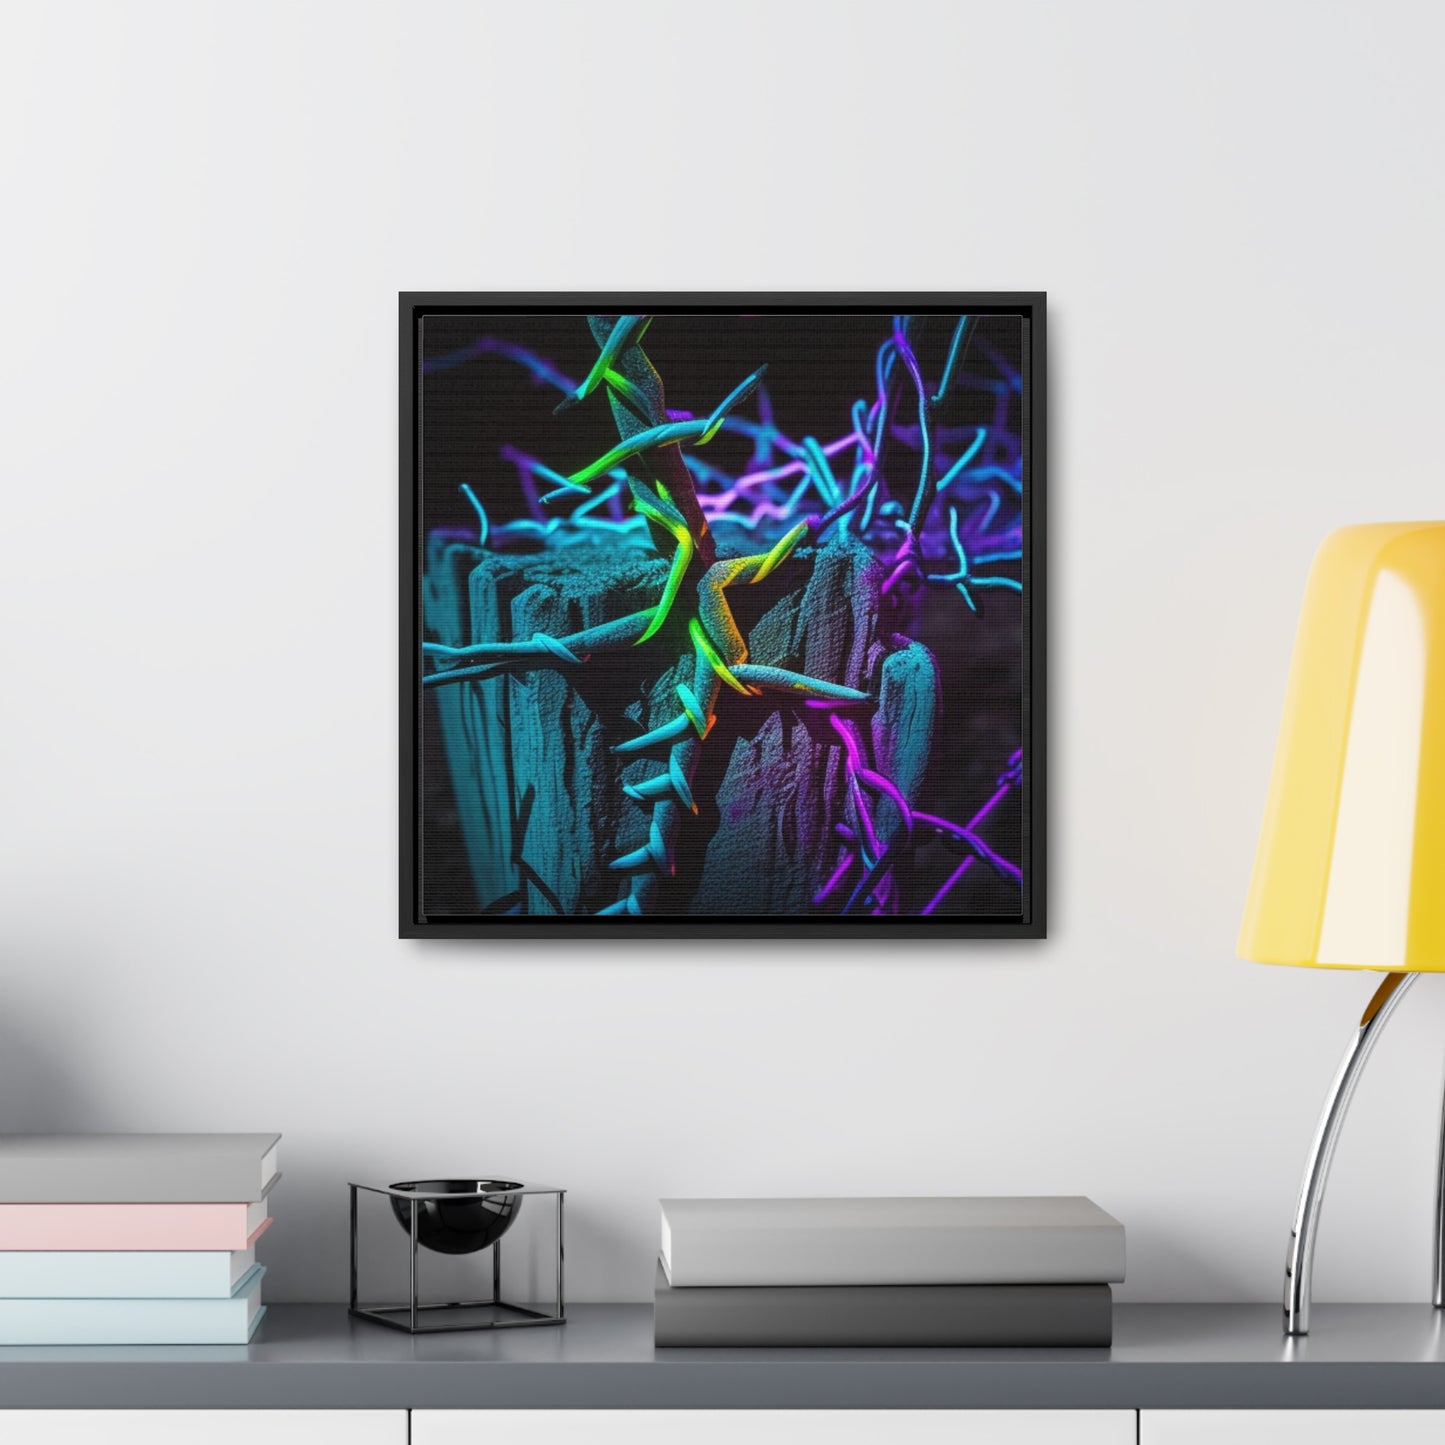 Gallery Canvas Wraps, Square Frame Macro Neon Barbs 3